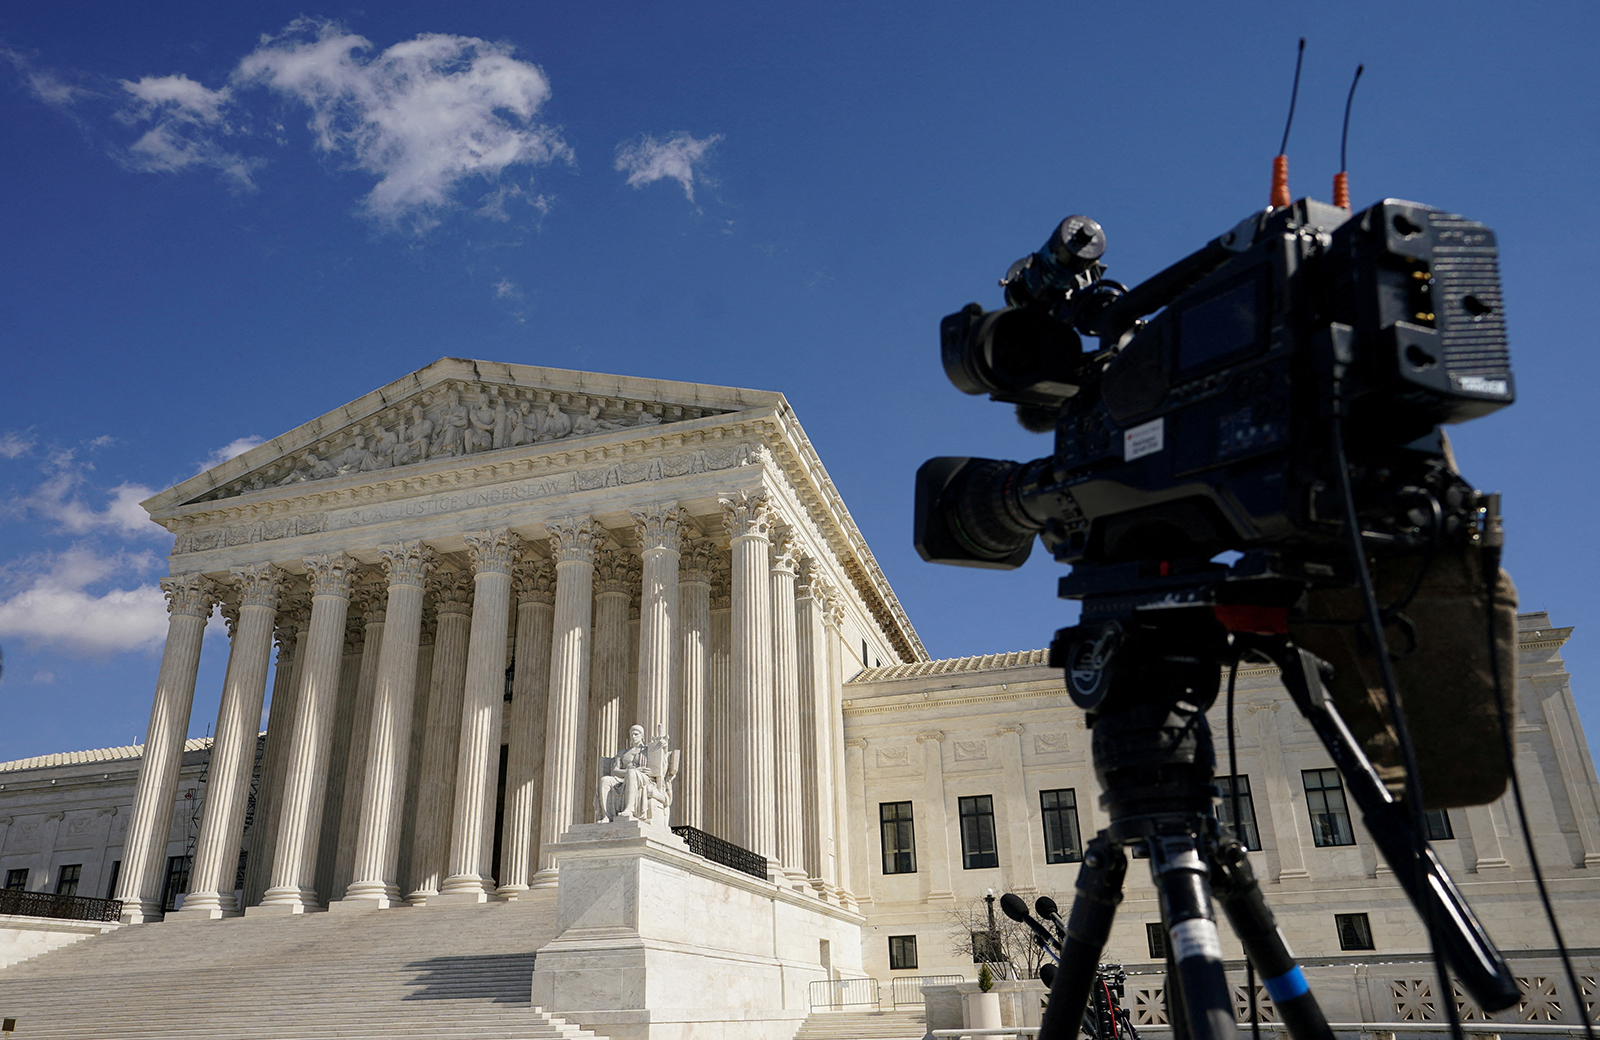 The U.S. Supreme Court seen on February 21.